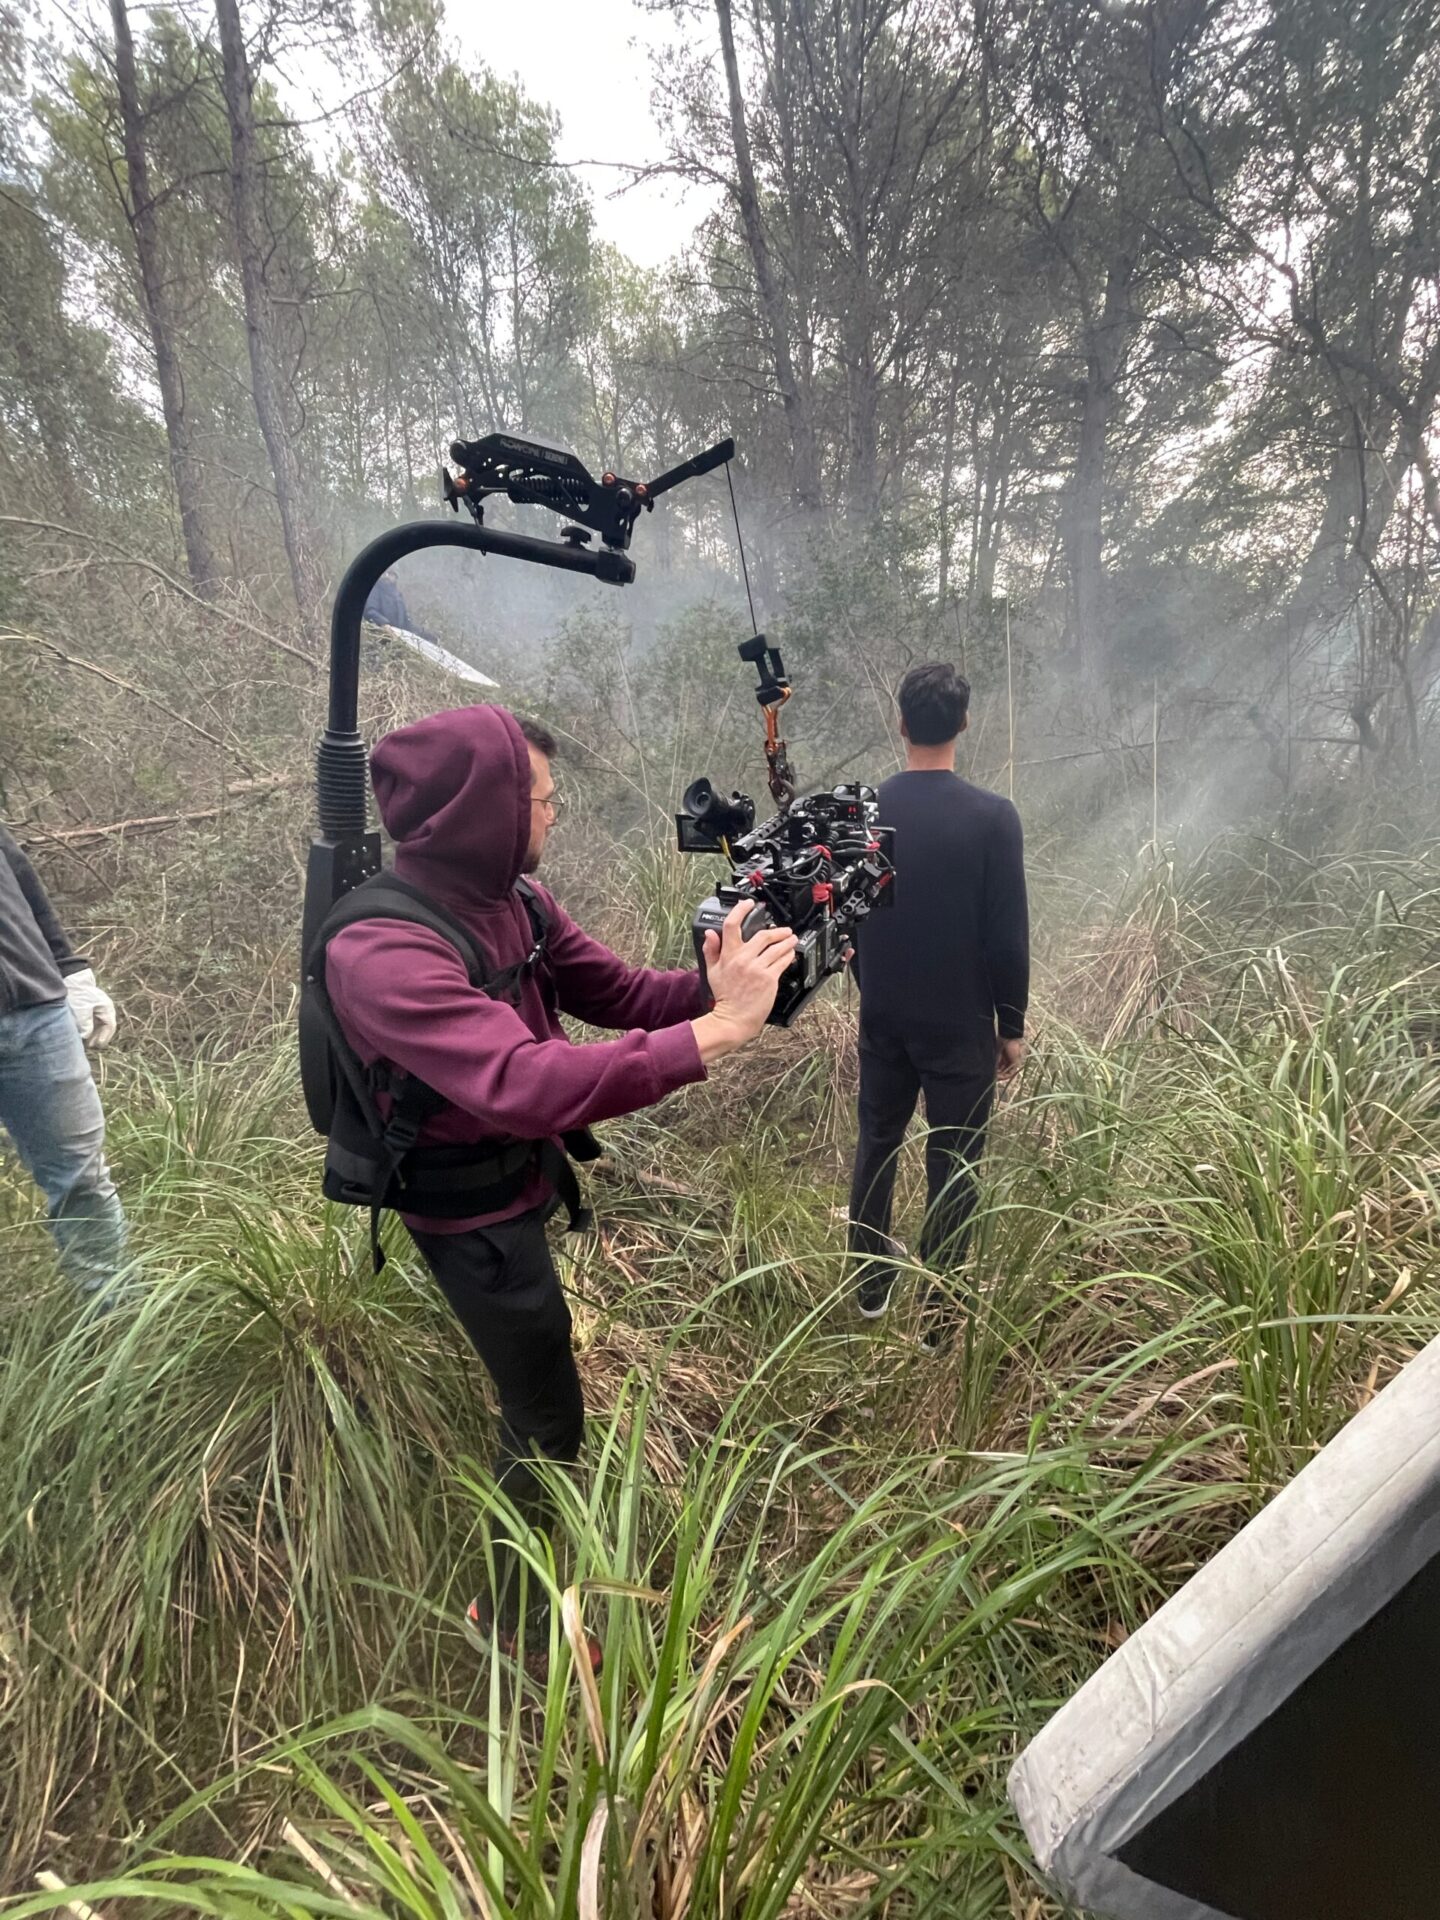 car commercial kia rafa nadal scorpio arm drone team mallorca palma nature forest camera